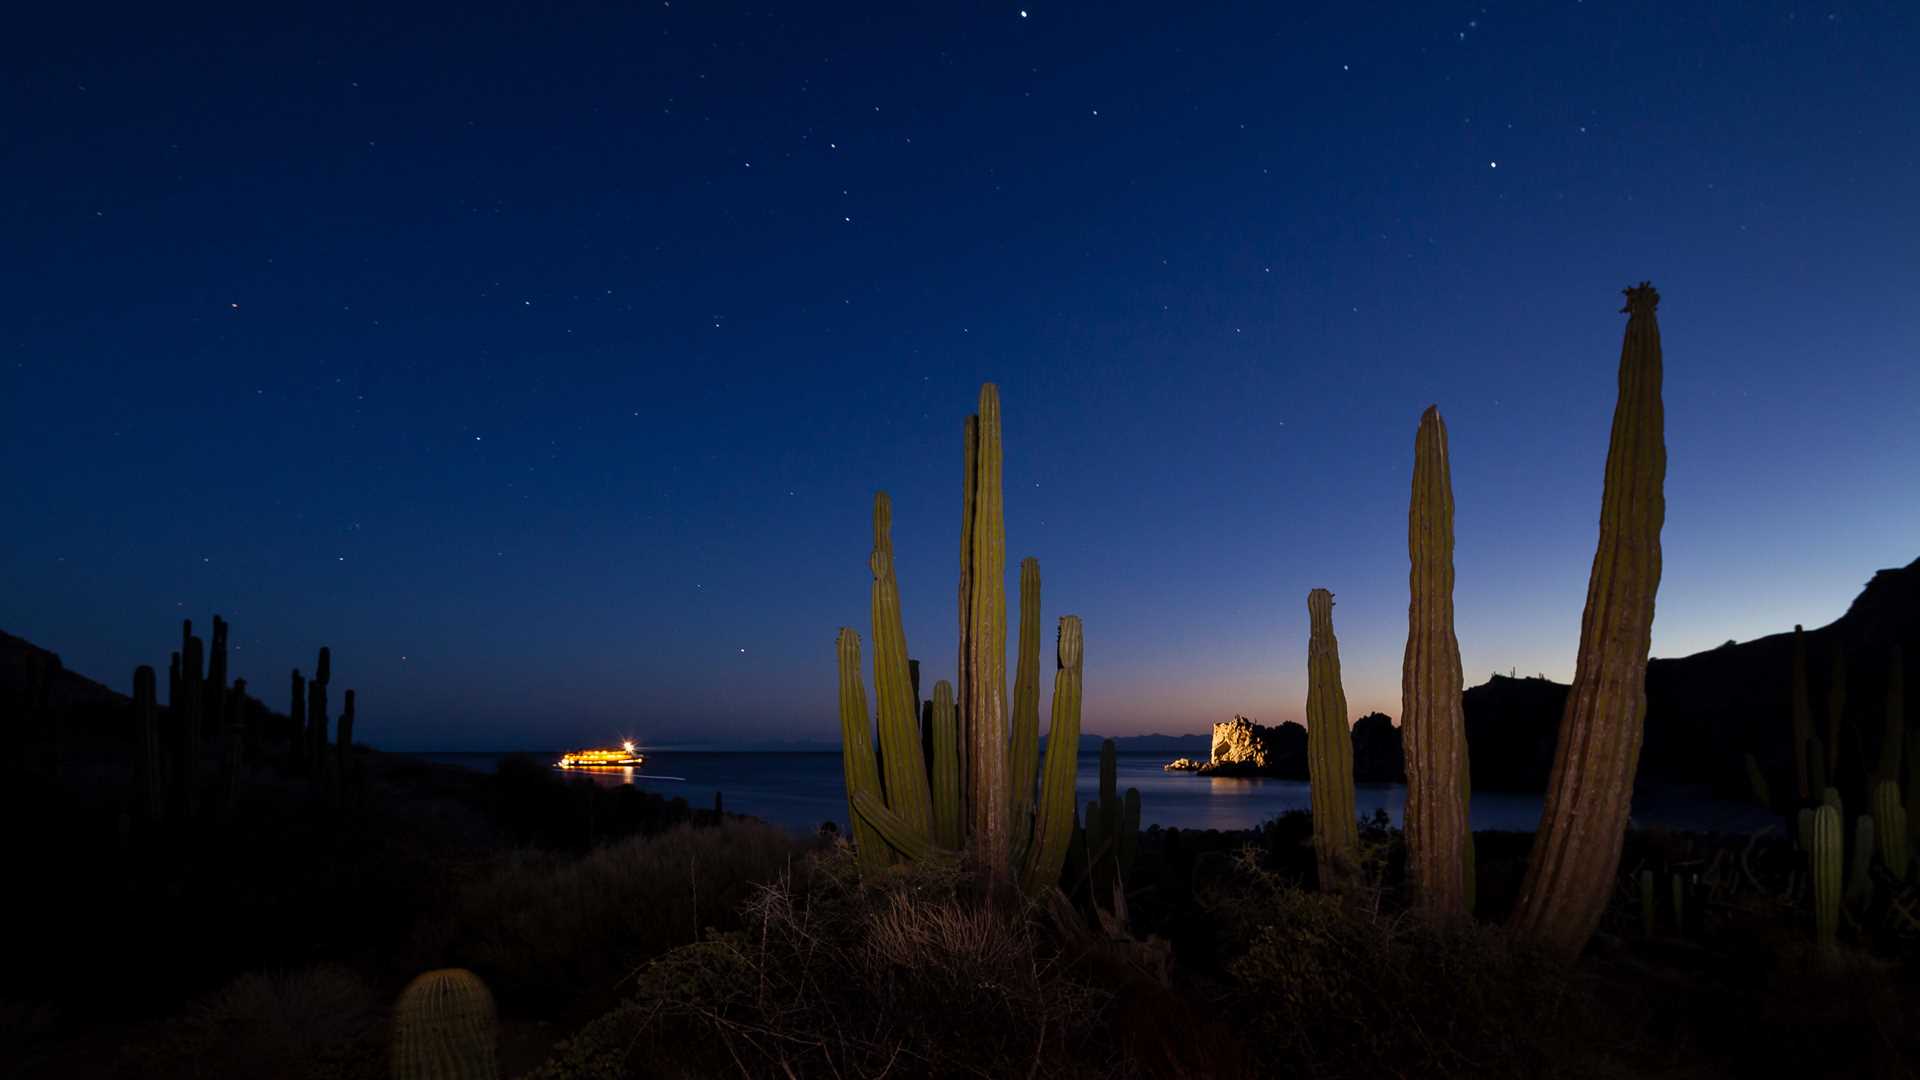 Giant cacti against a starry Baja California night